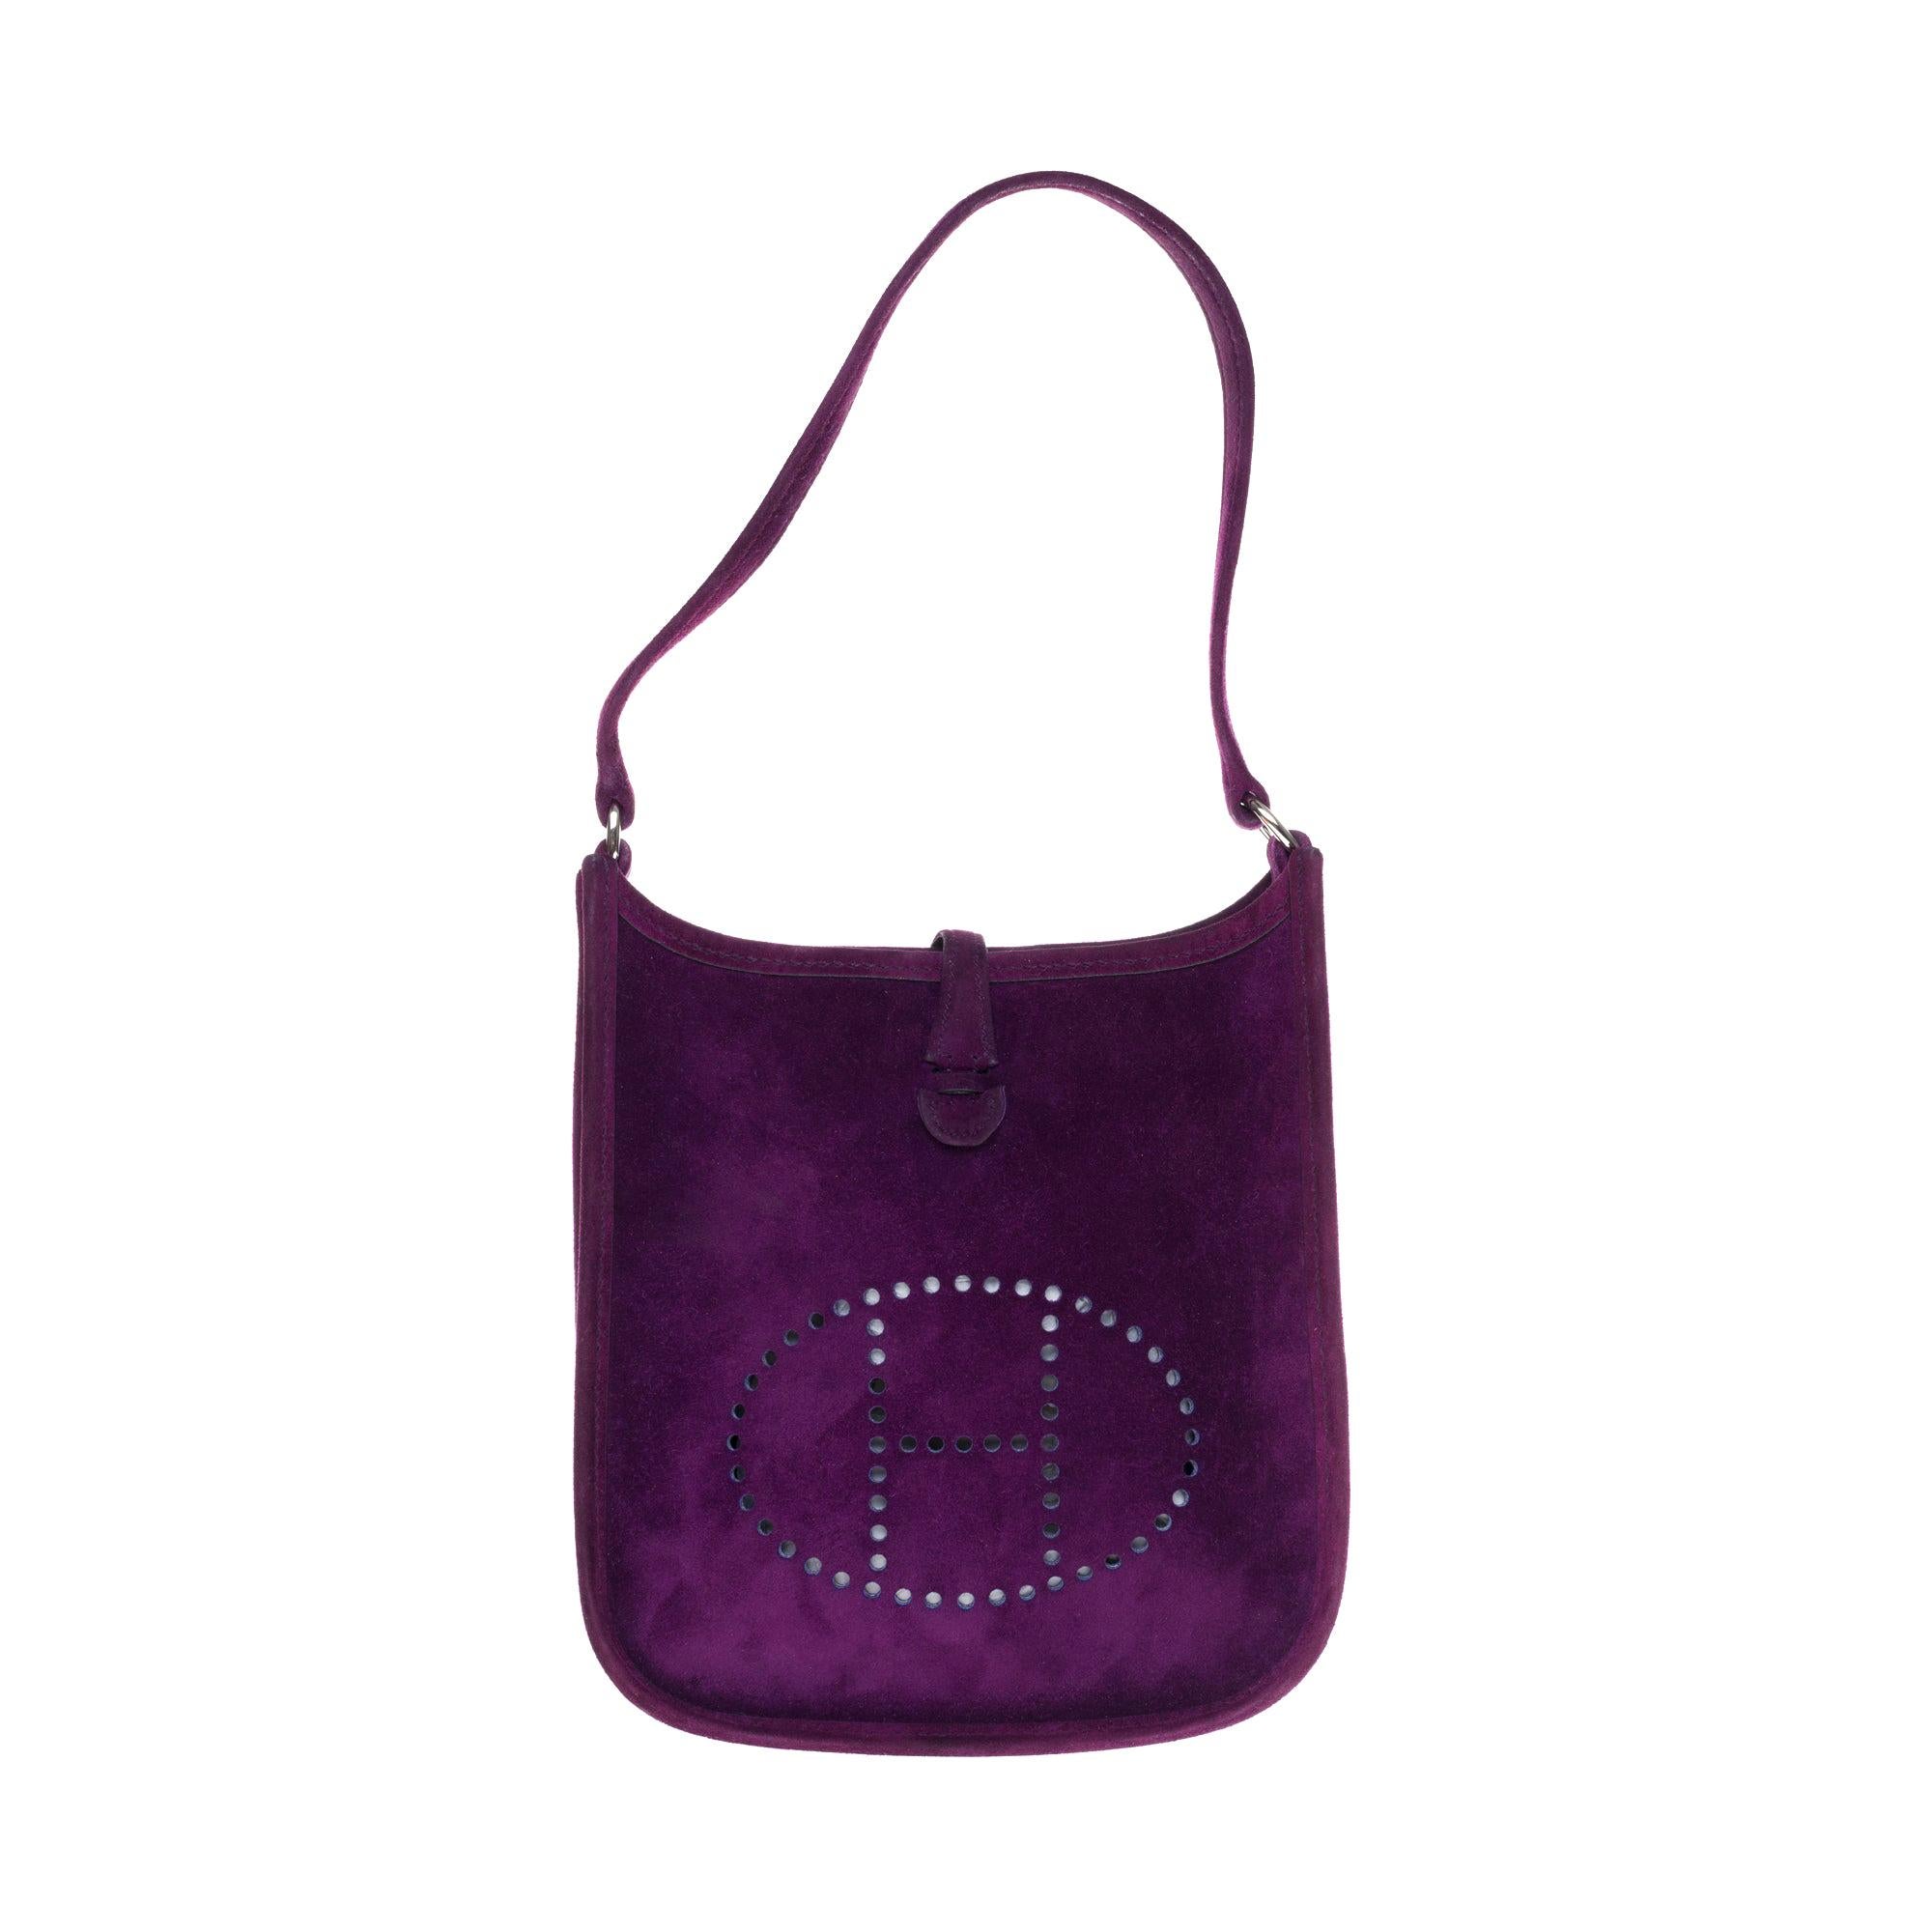 Rare Hermès Evelyne TPM handbag in purple suede, new condition !